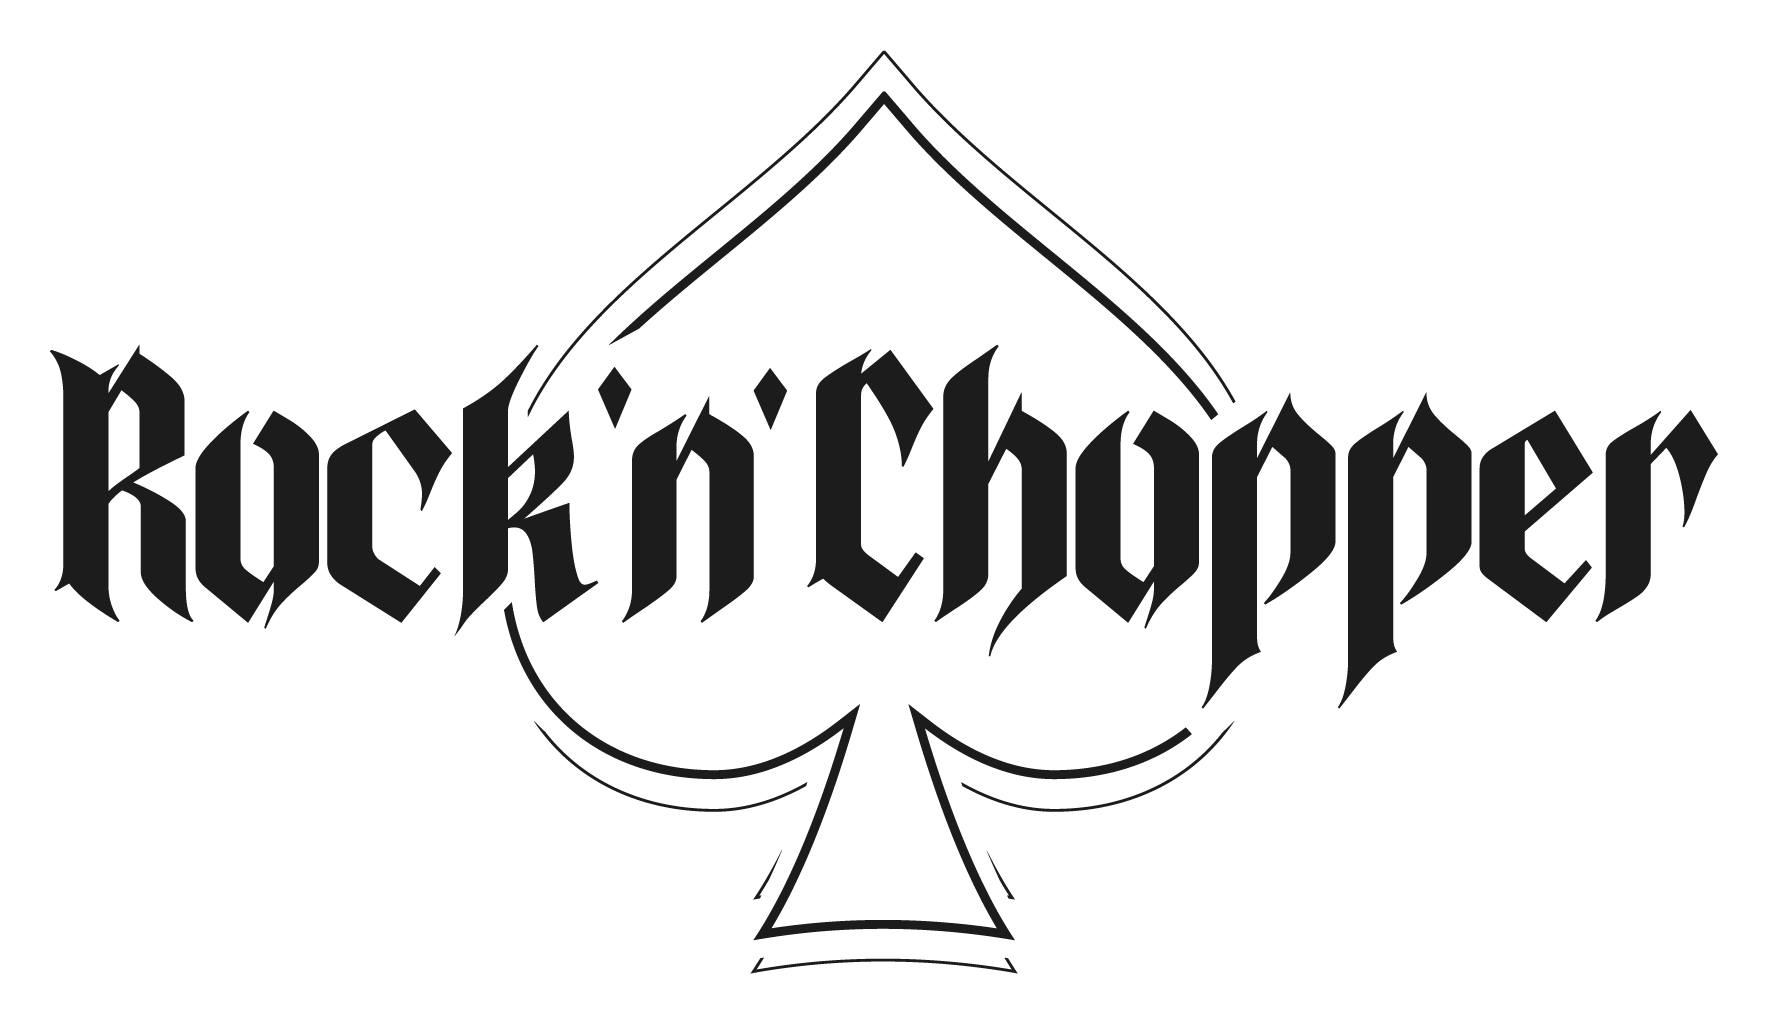 ROCK'N'CHOPPER